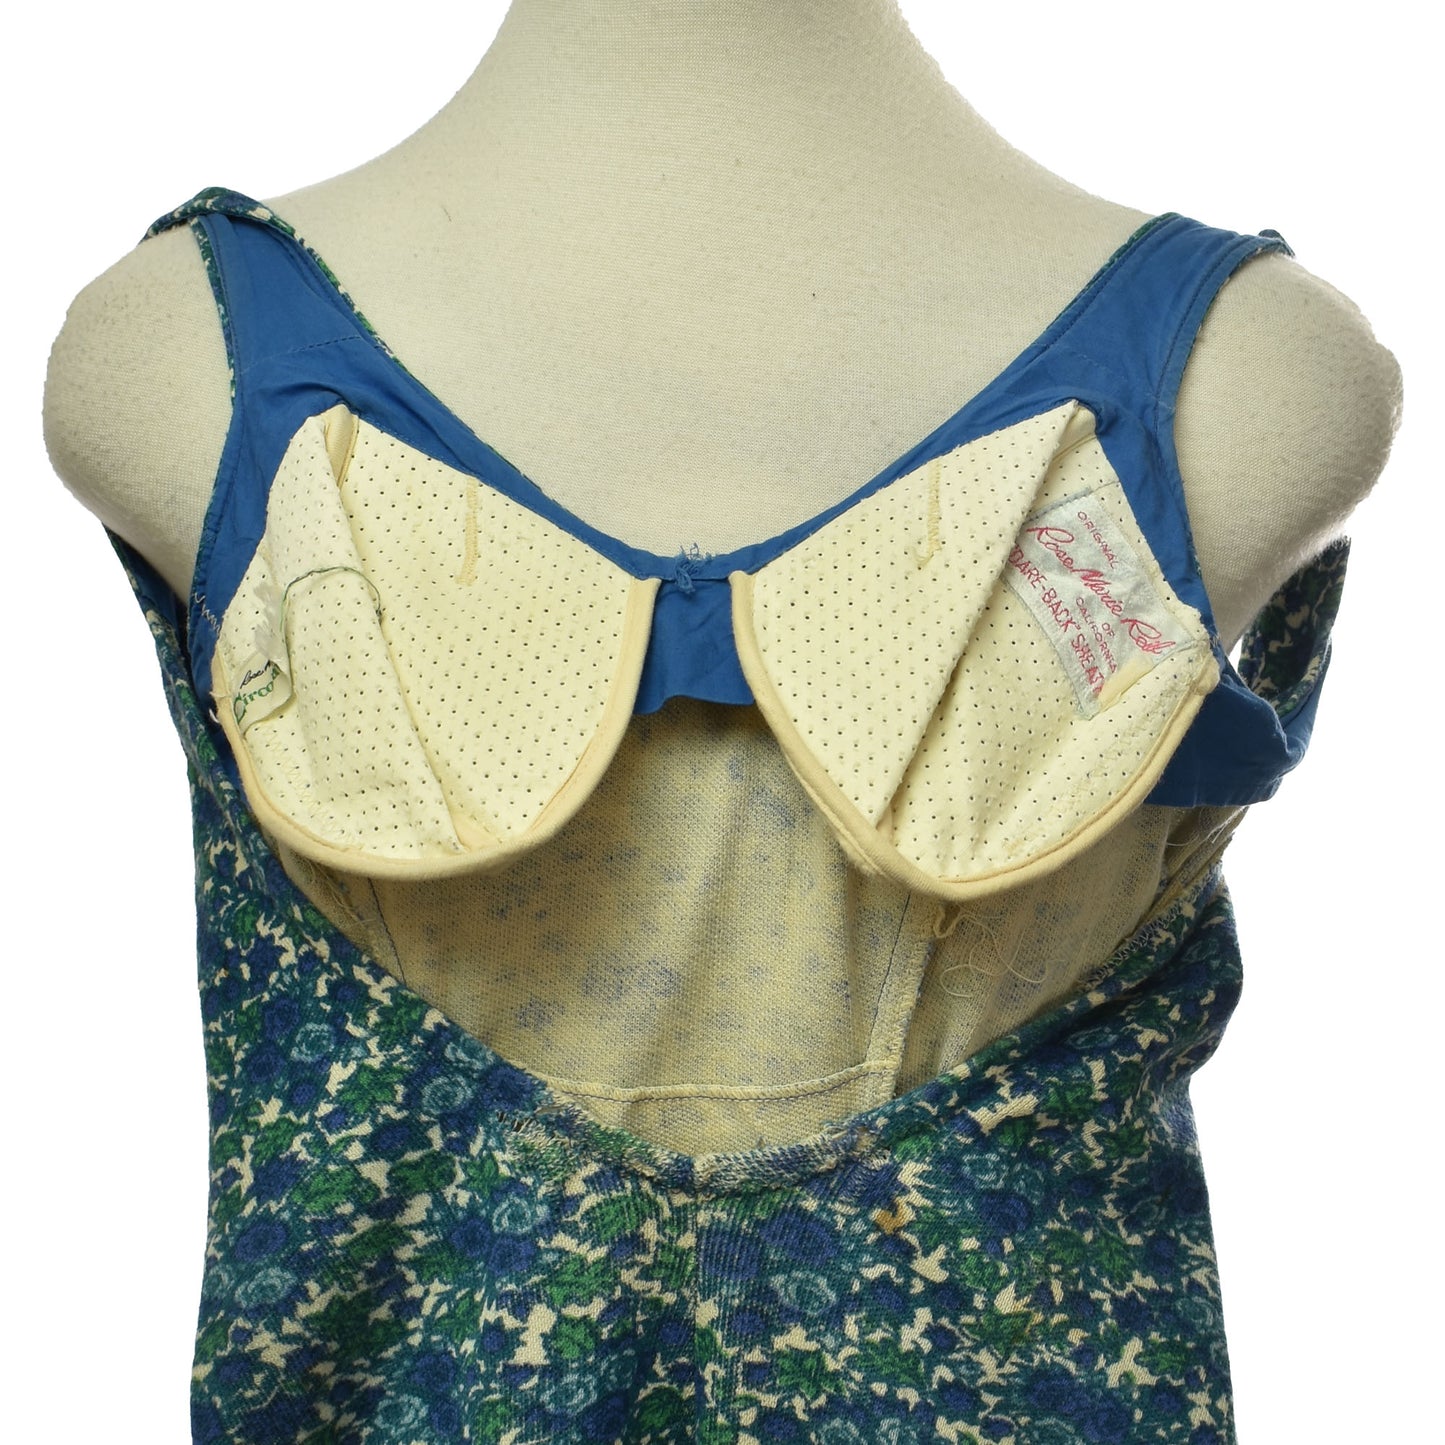 Vintage 50s Swimsuit by Rose Marie Reid "Dare-Back" Sheath